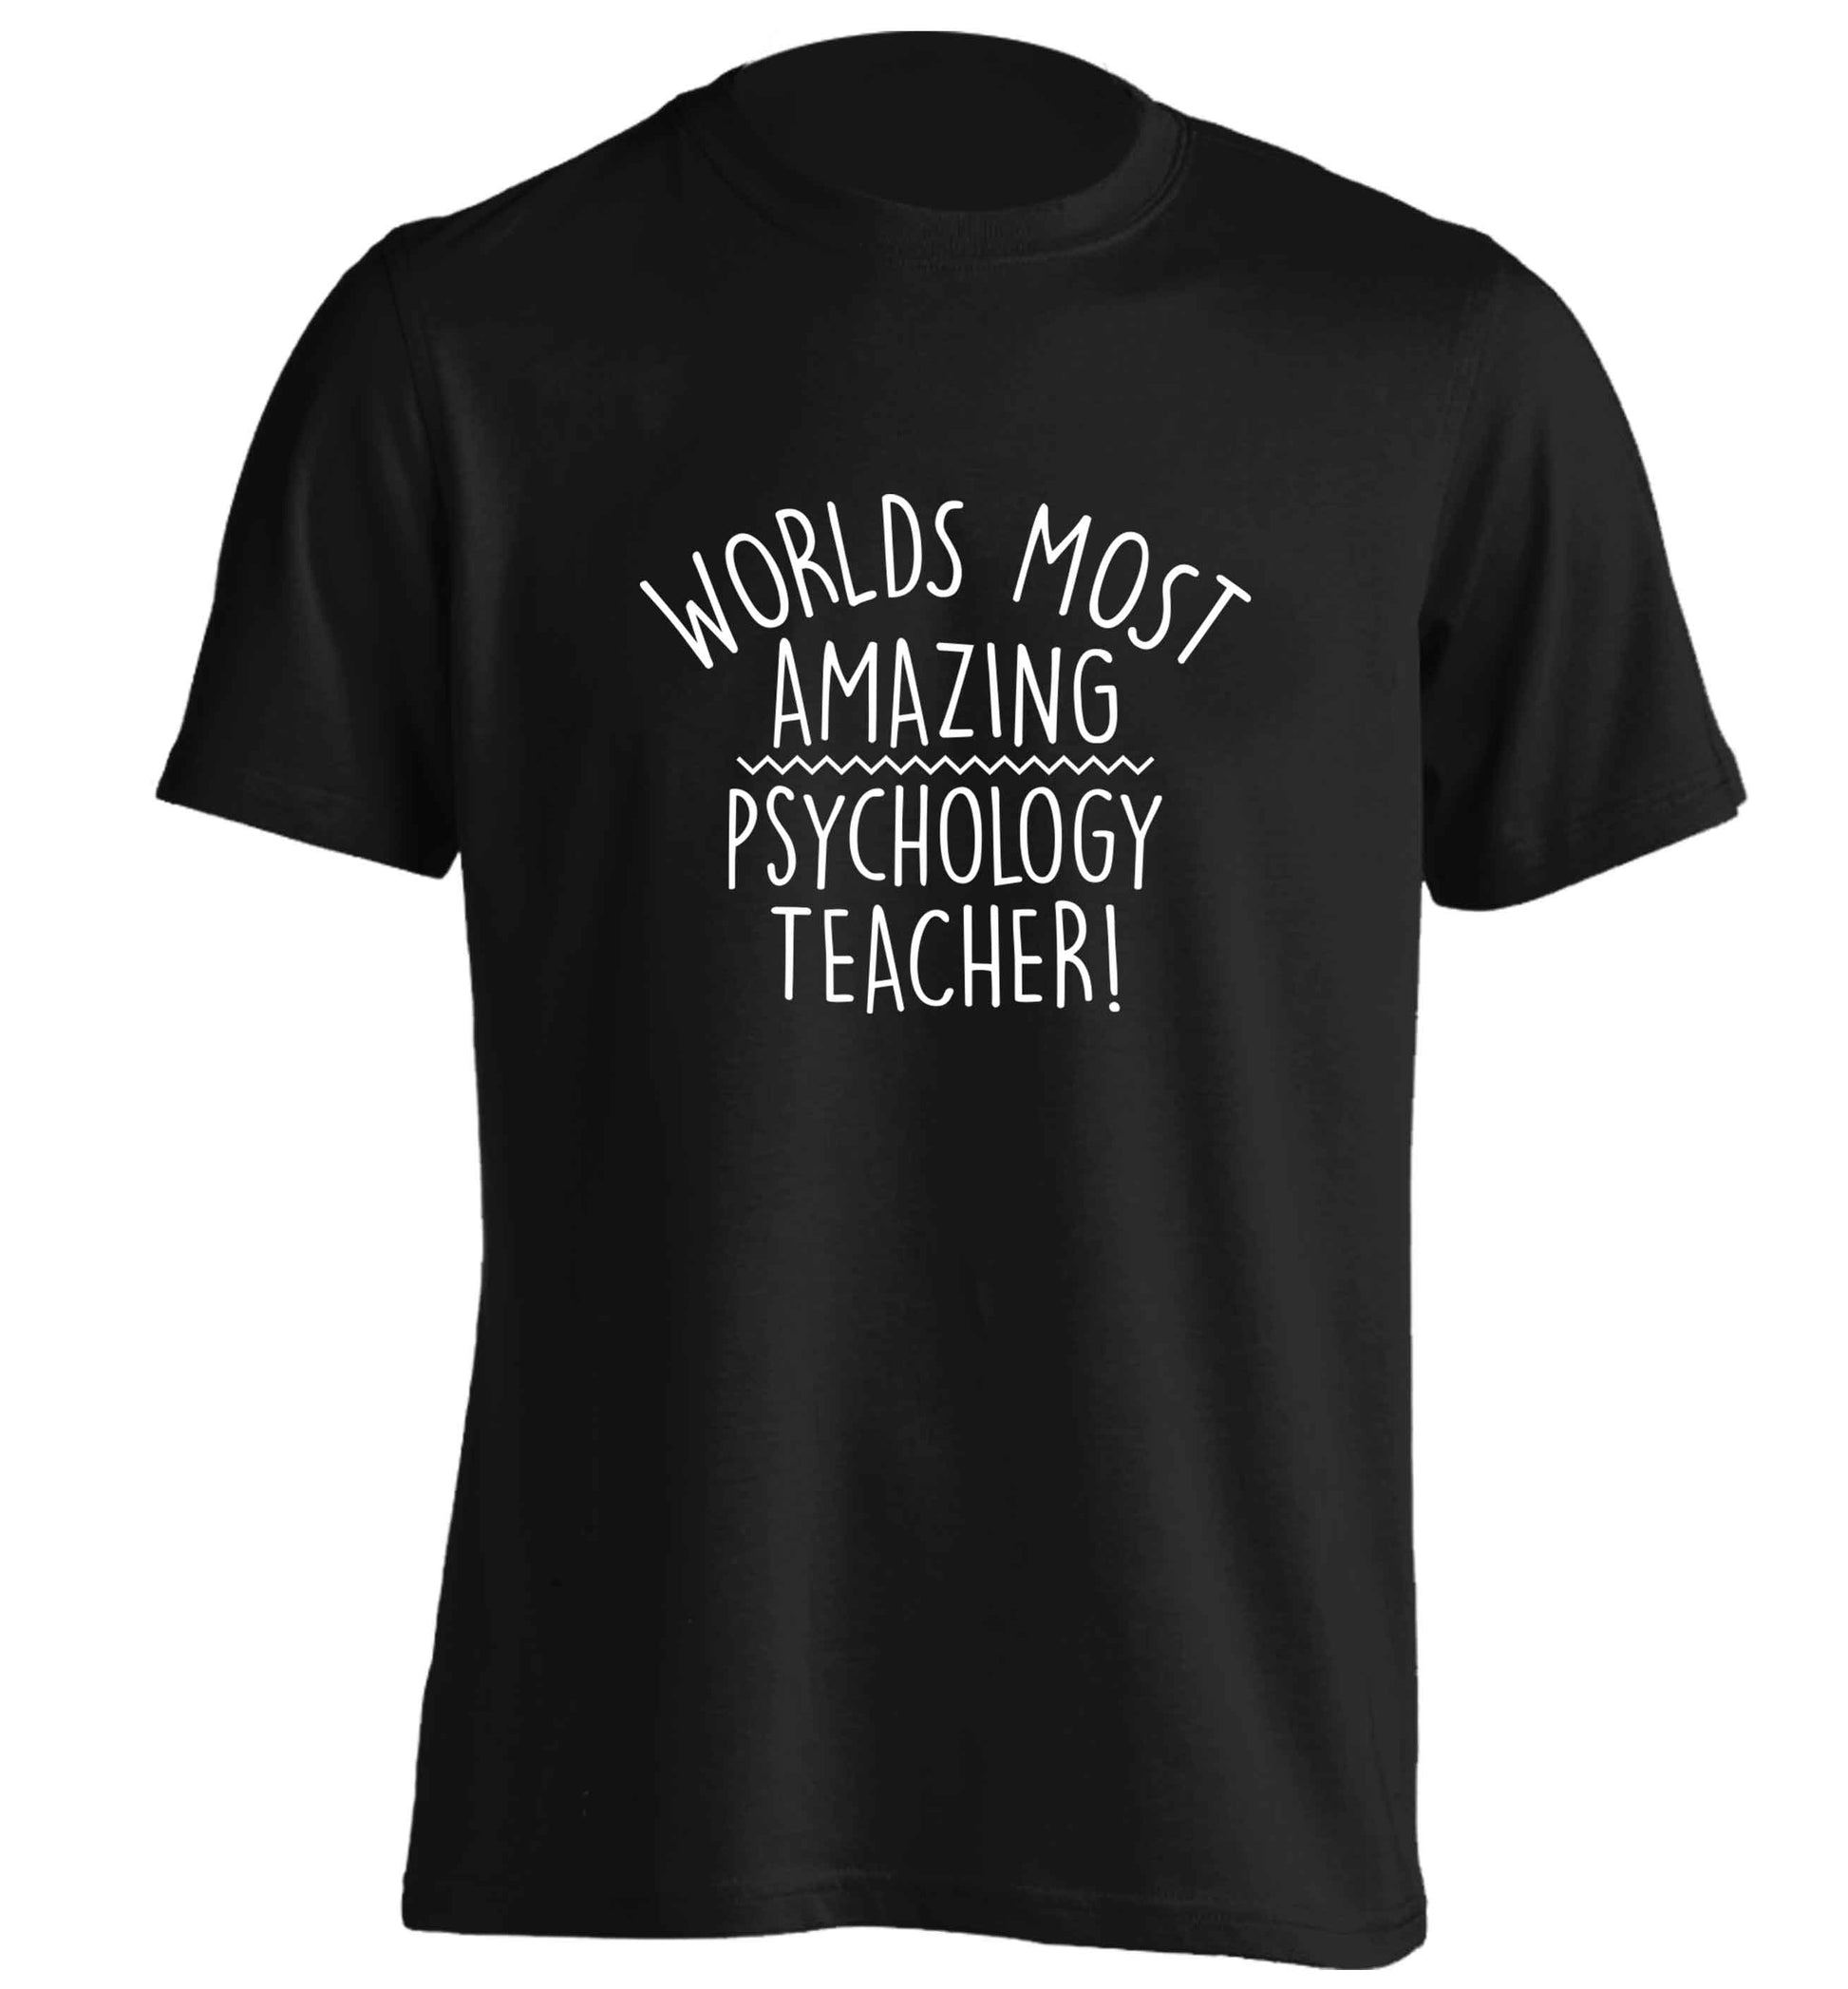 Worlds most amazing psychology teacher adults unisex black Tshirt 2XL